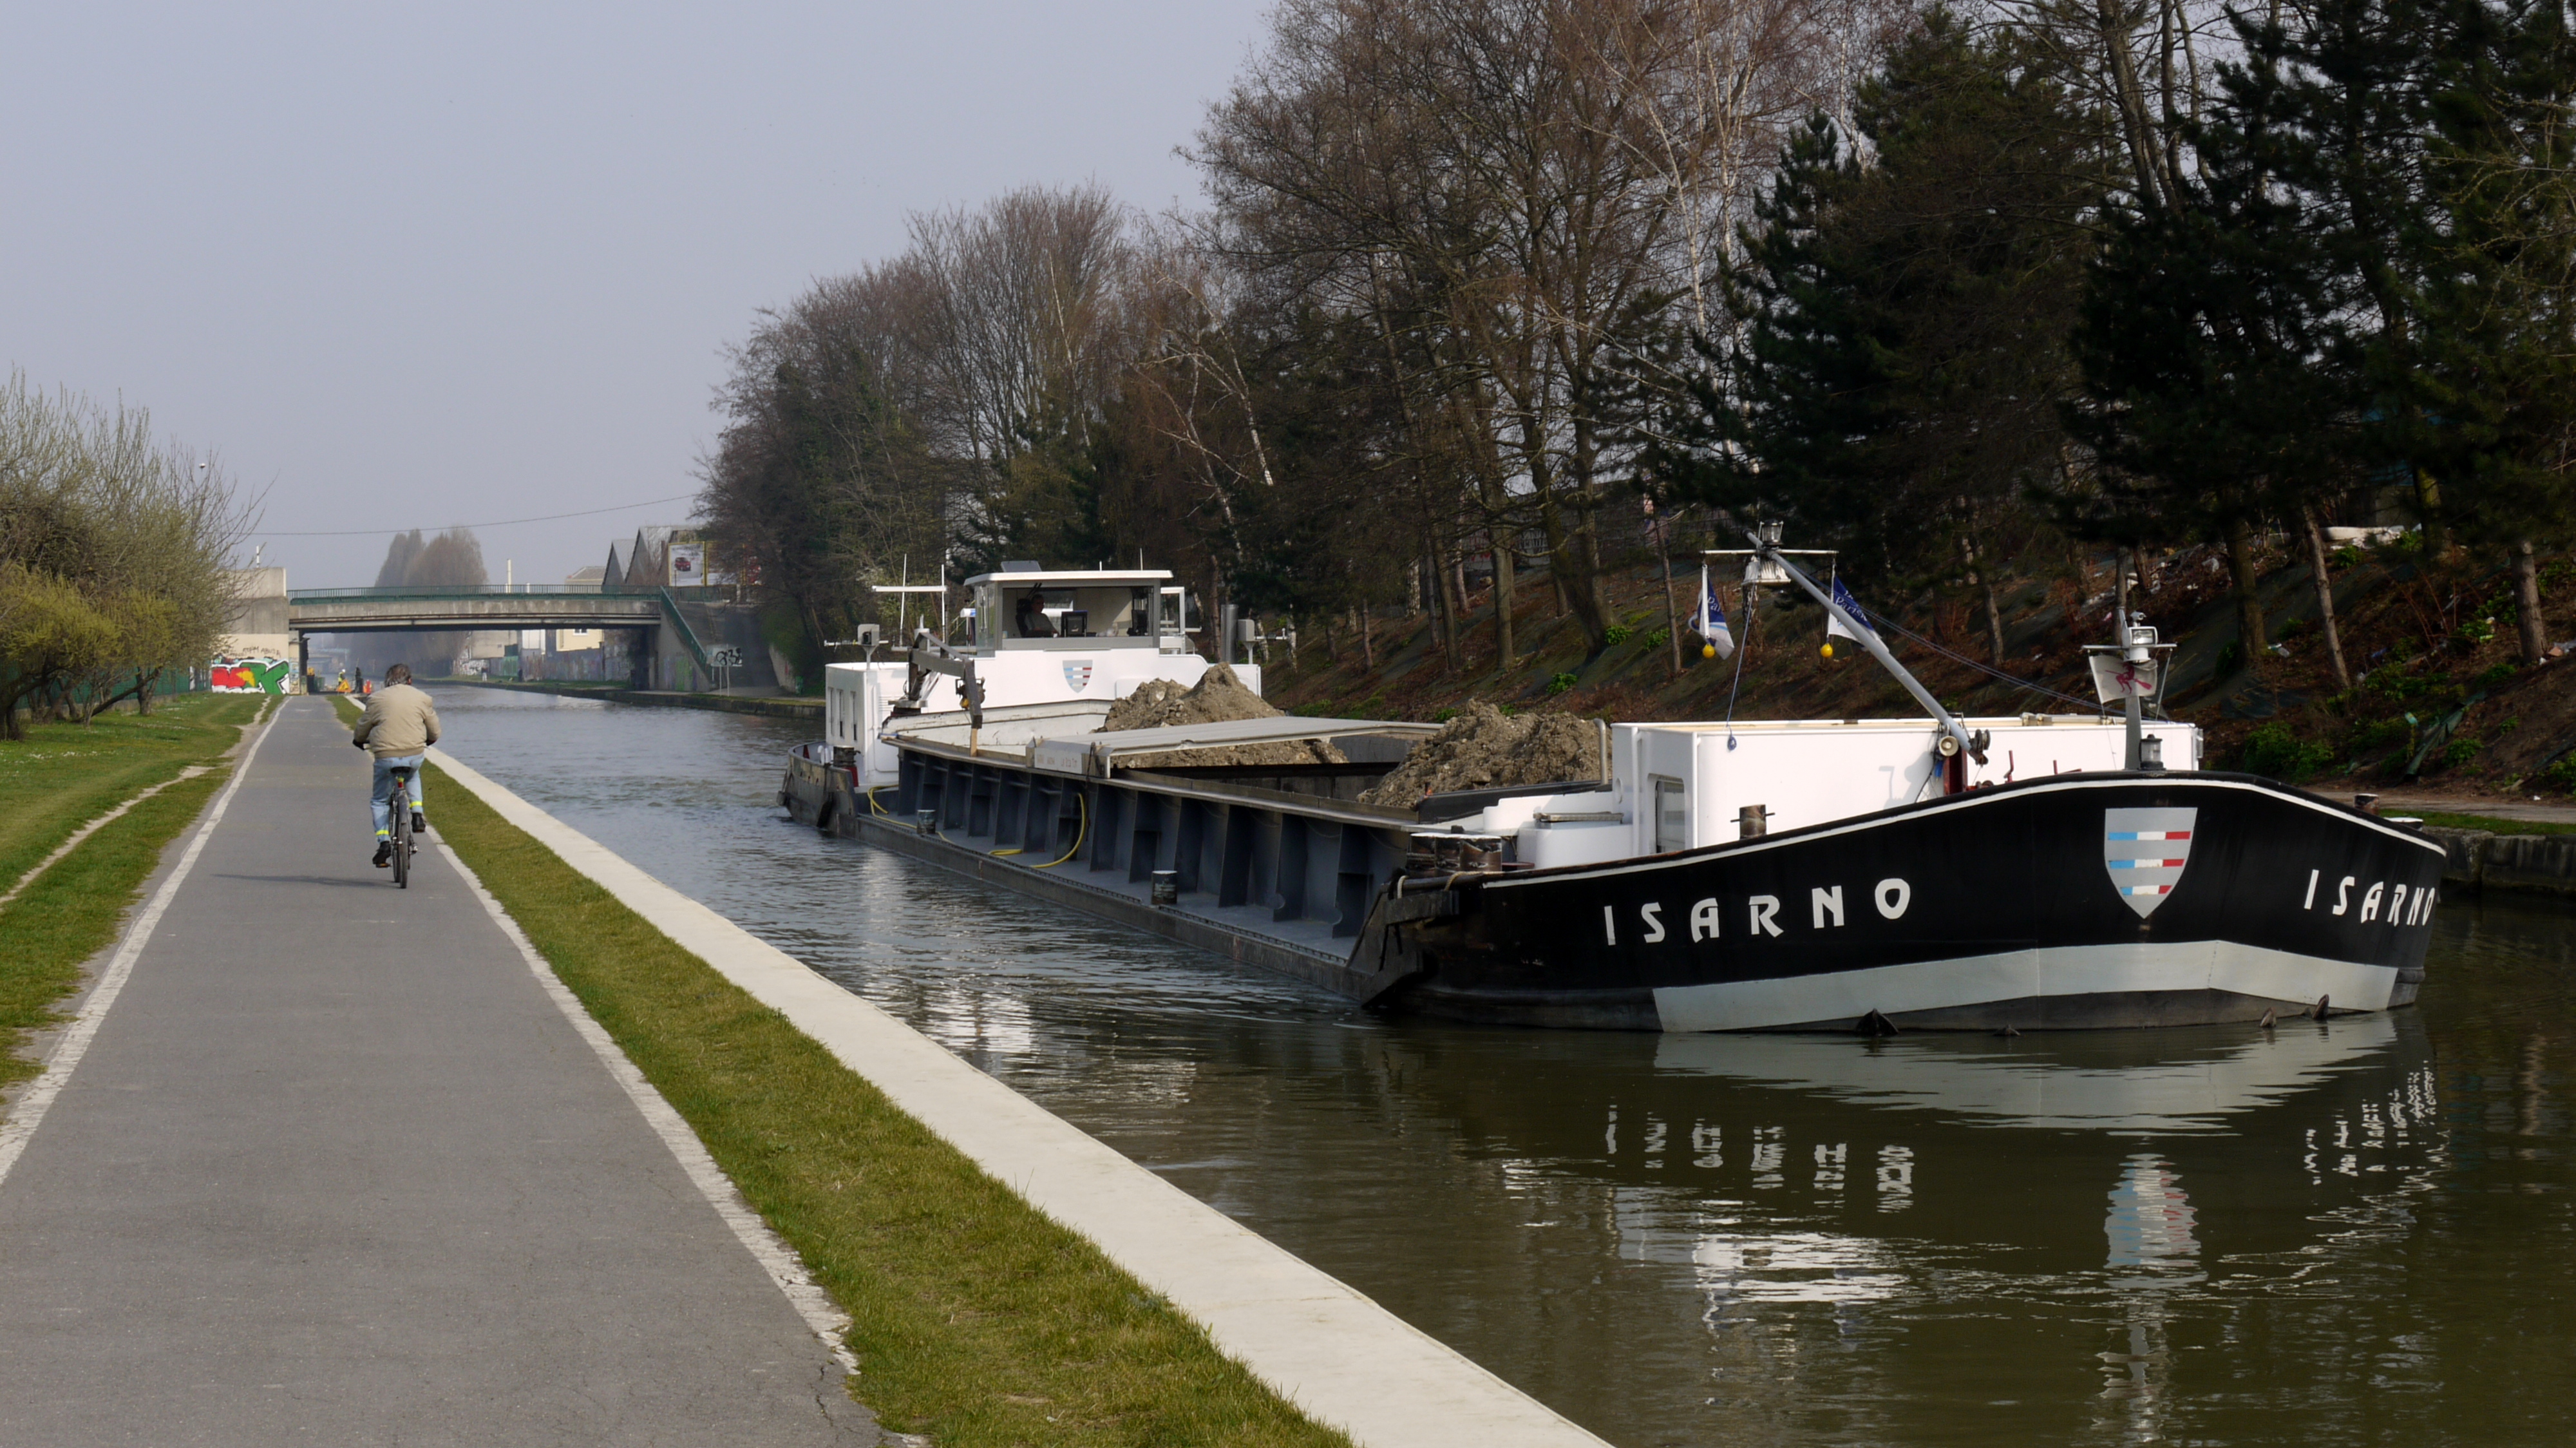 Canal de l'Ourcq, Bobigny, March 2011